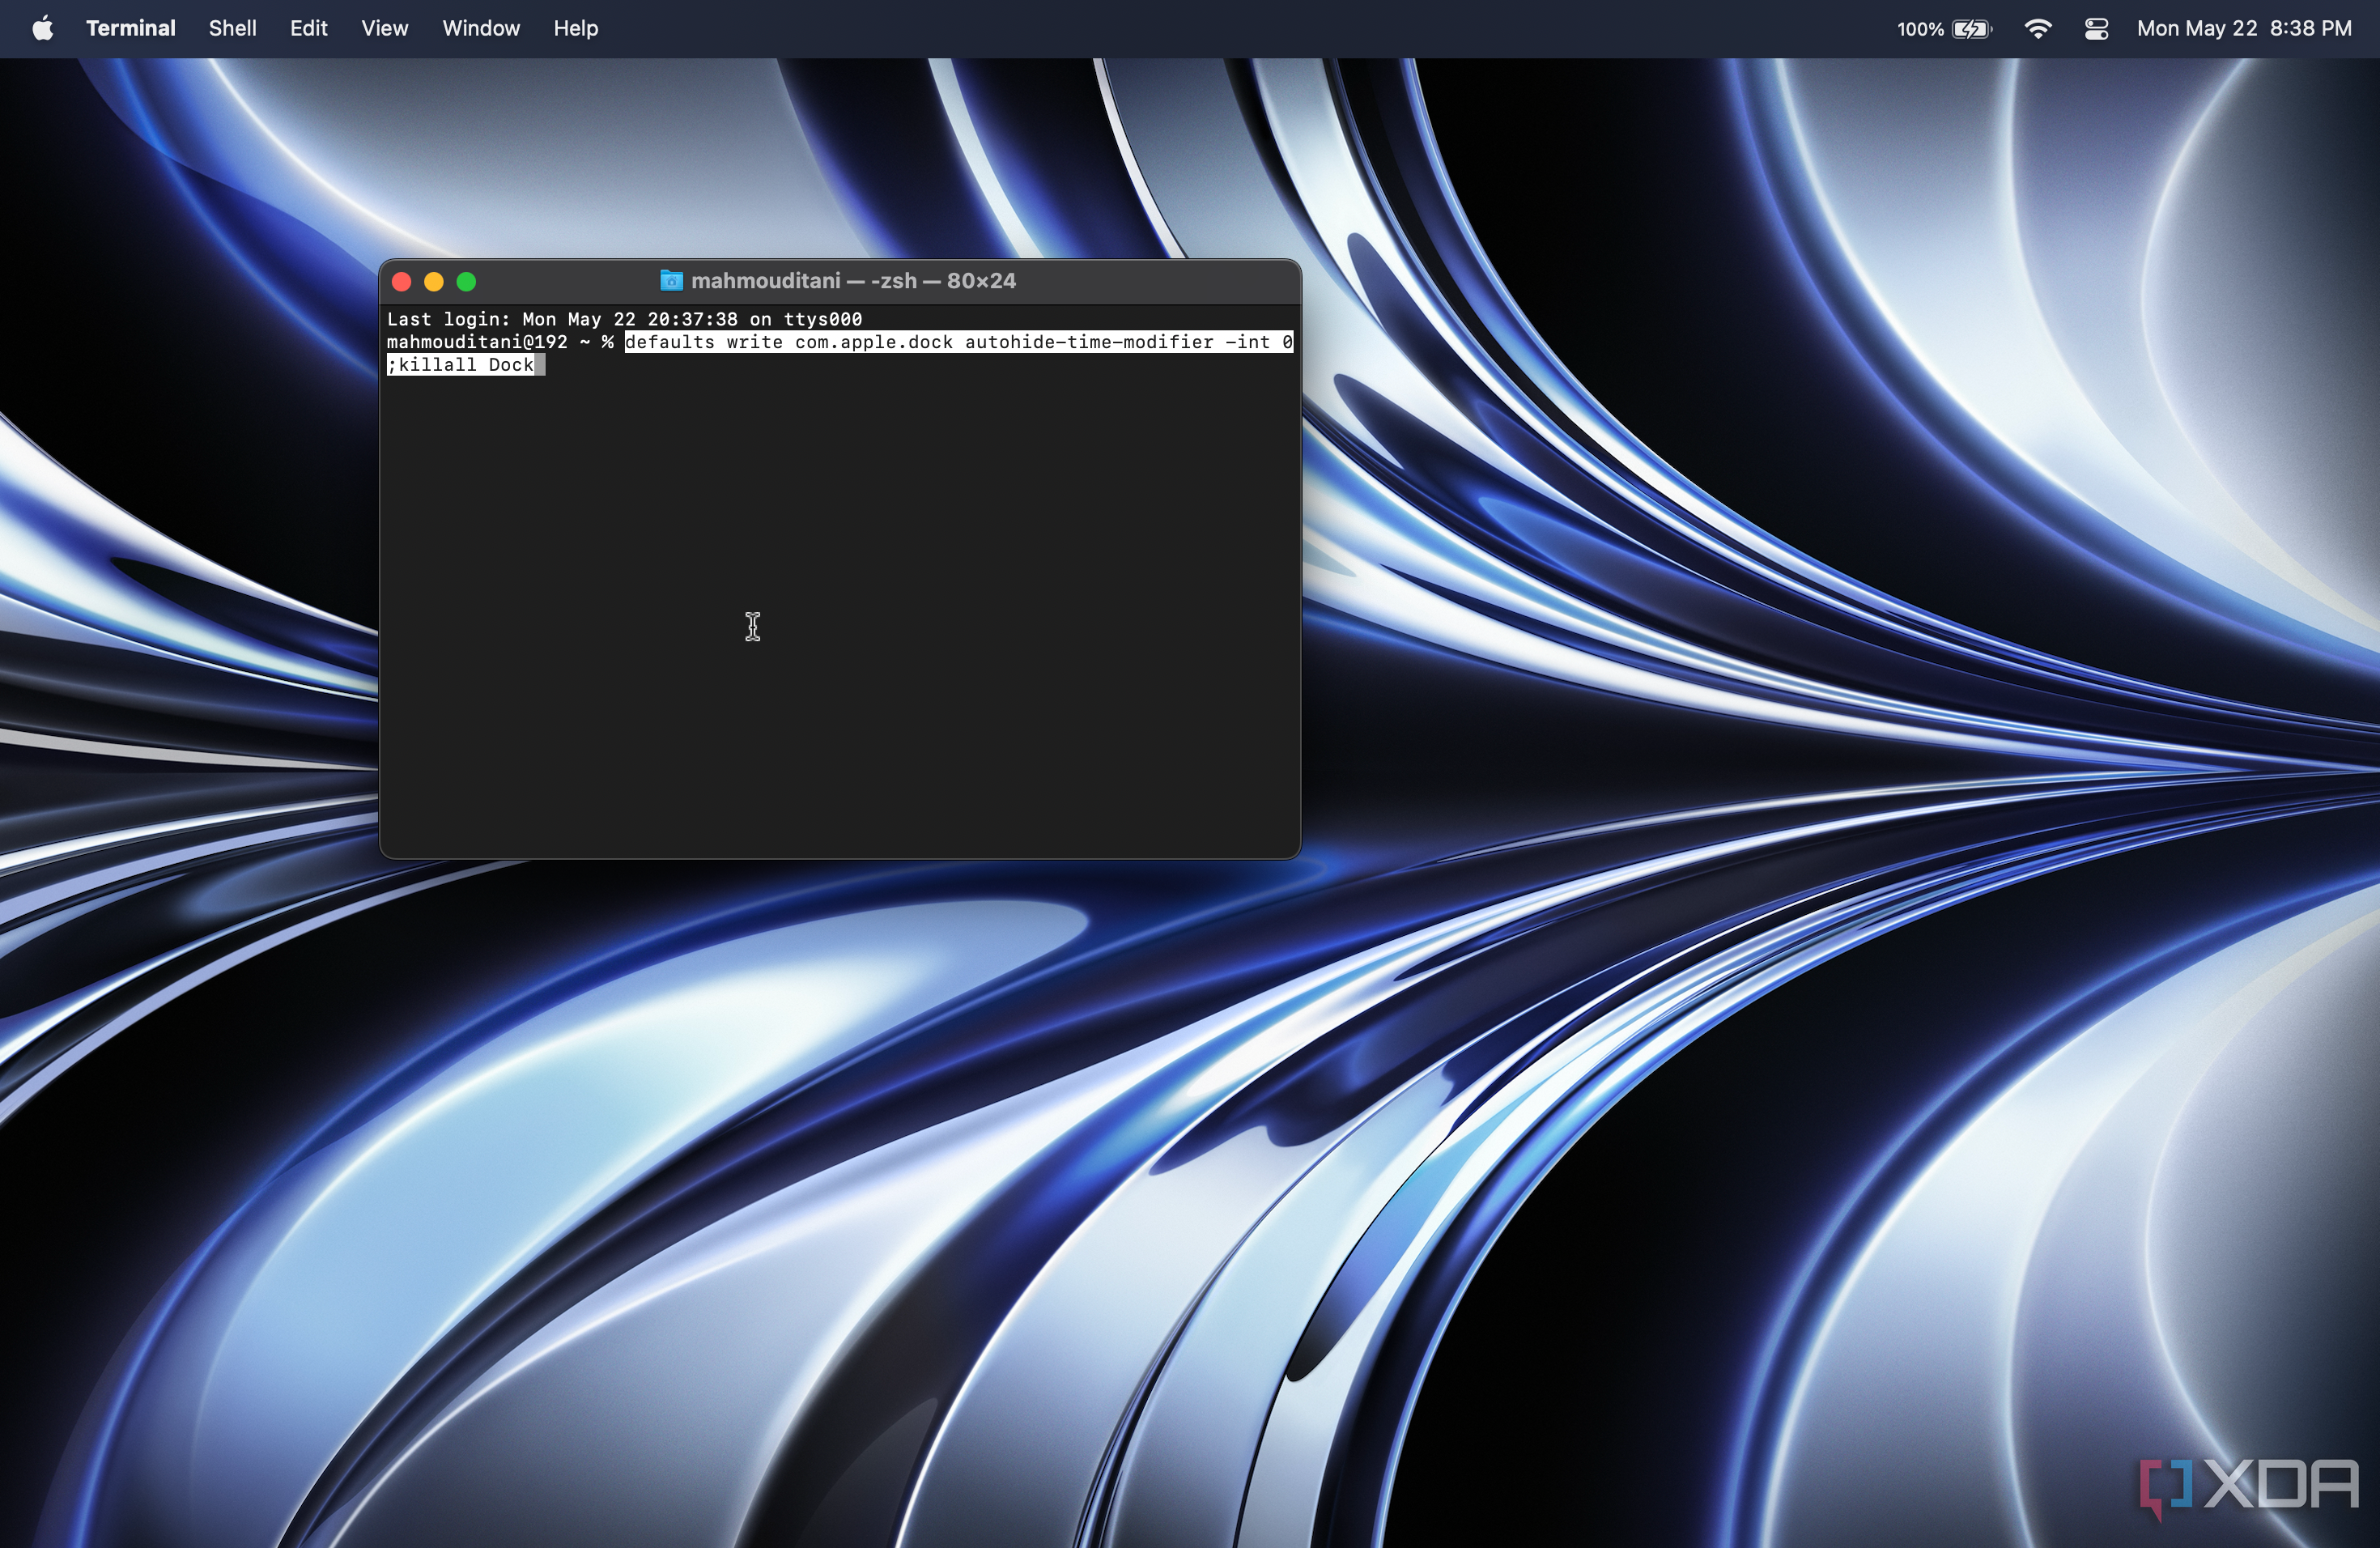 Terminal command to tweak dock animation speed on macOS